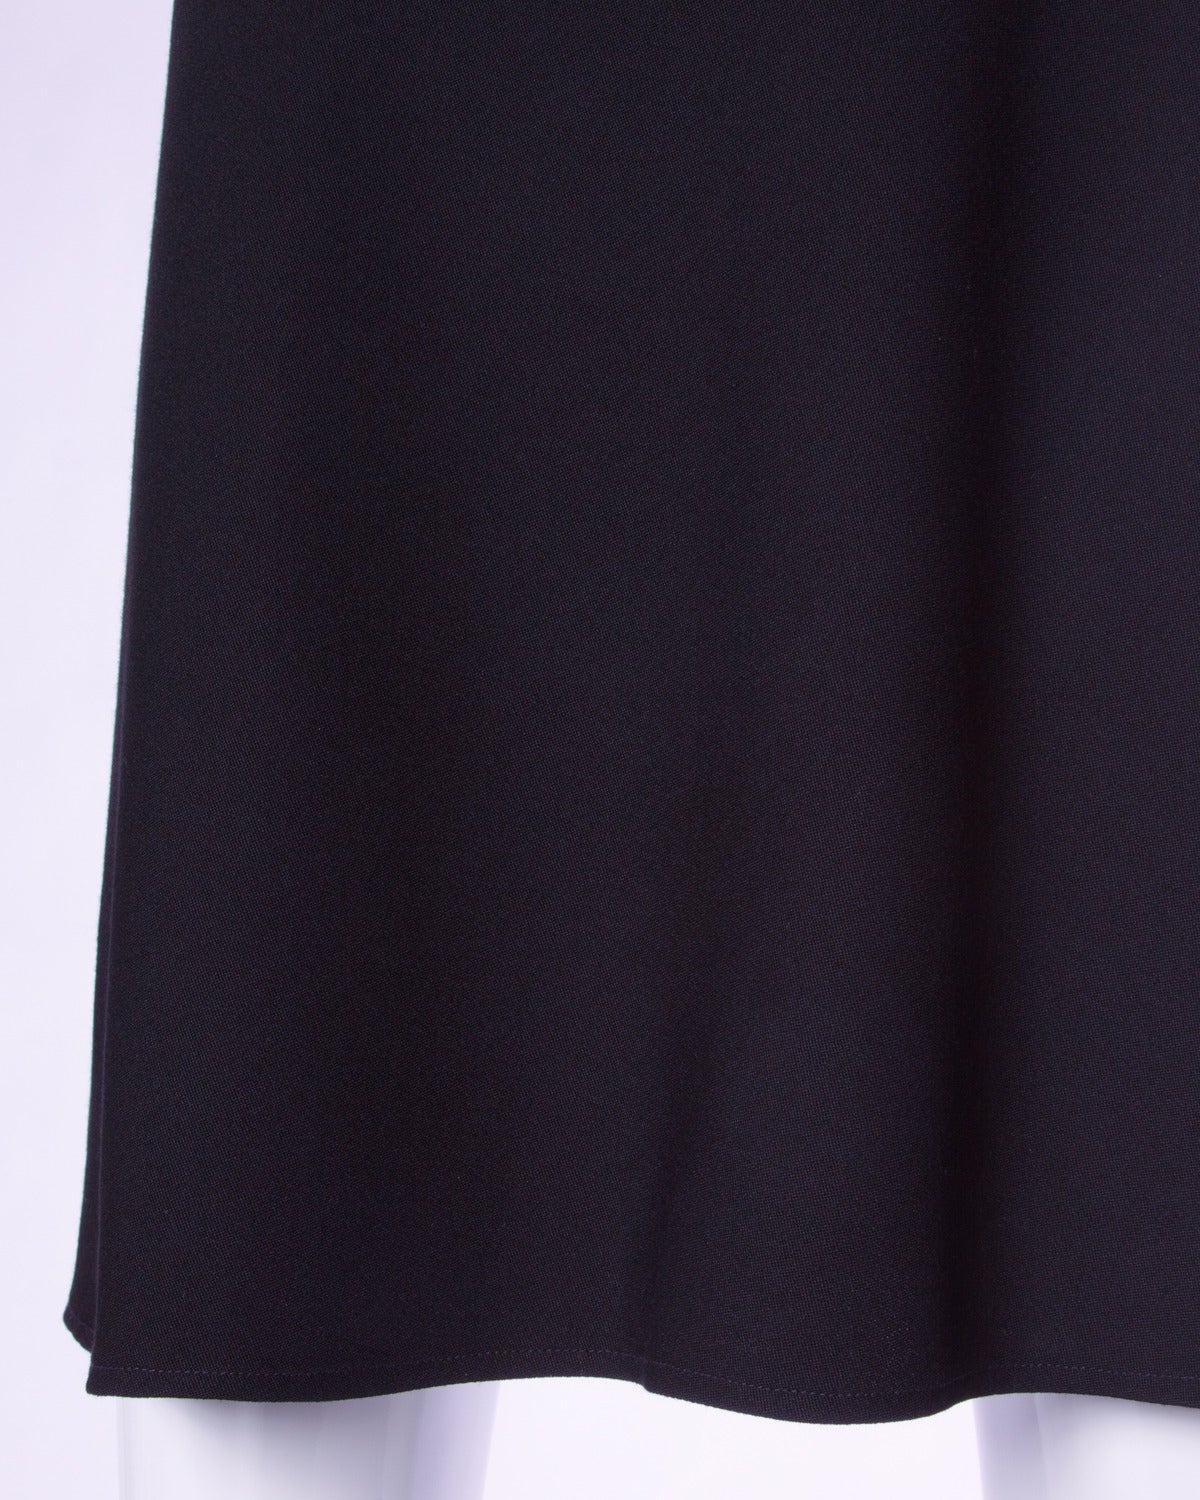 Karl Lagerfeld Vintage 1990s 90s Black Wool Skirt with Back Detail 1